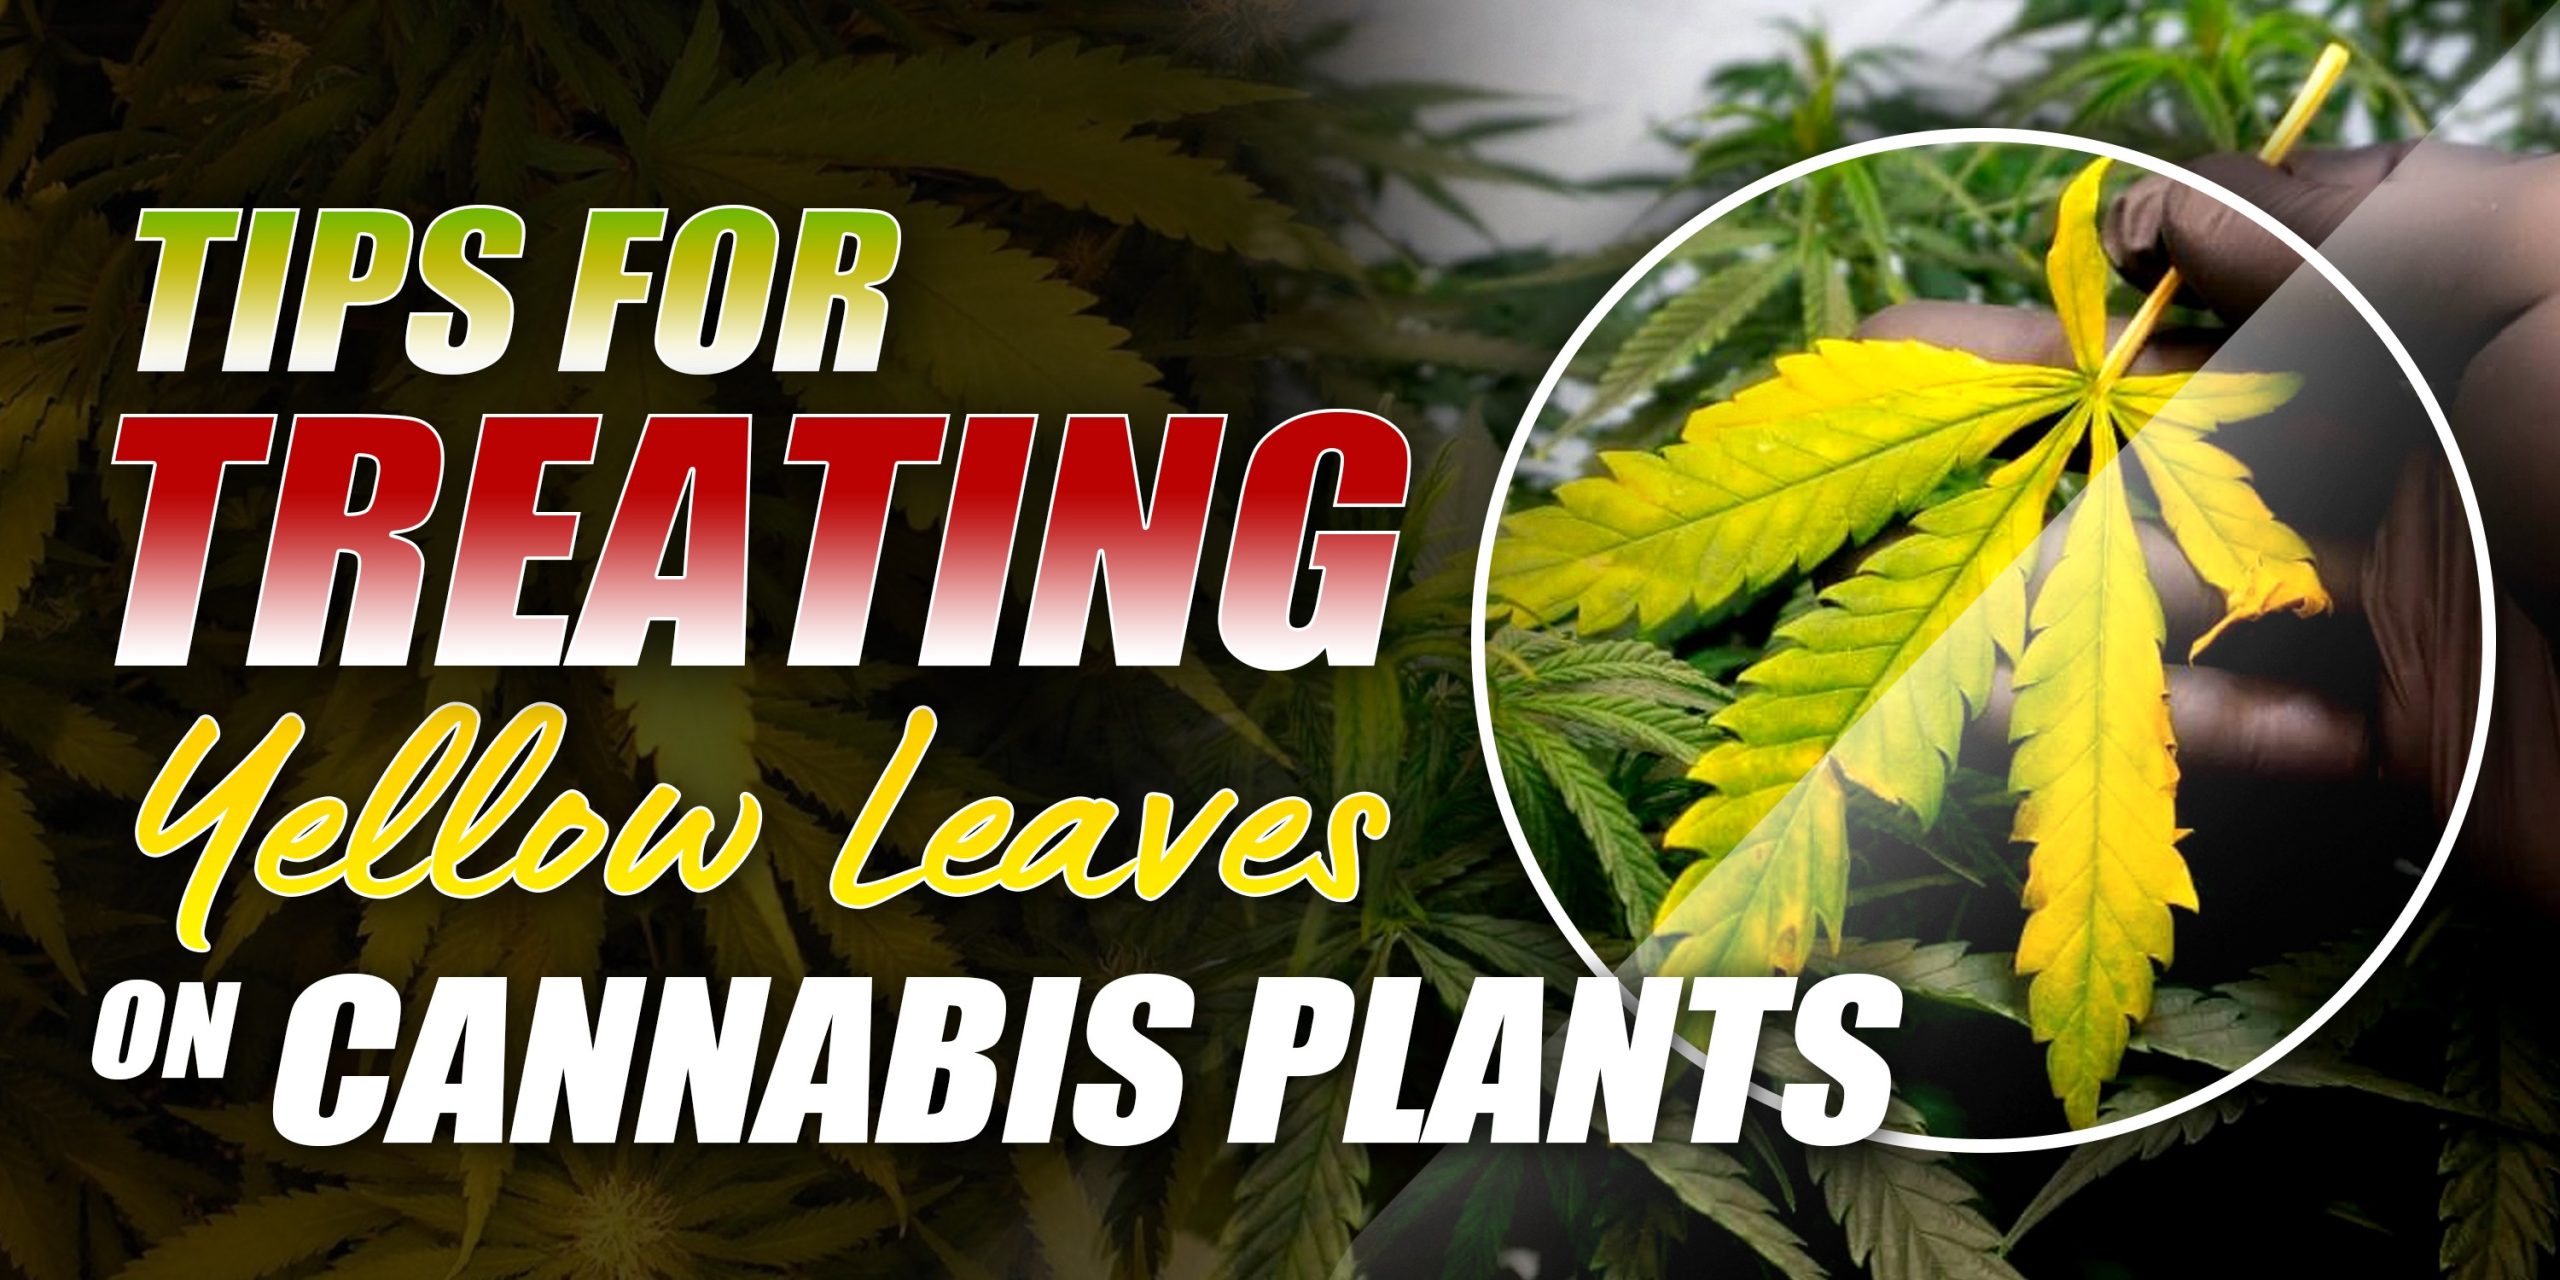 marijuanas plants yellow leaves